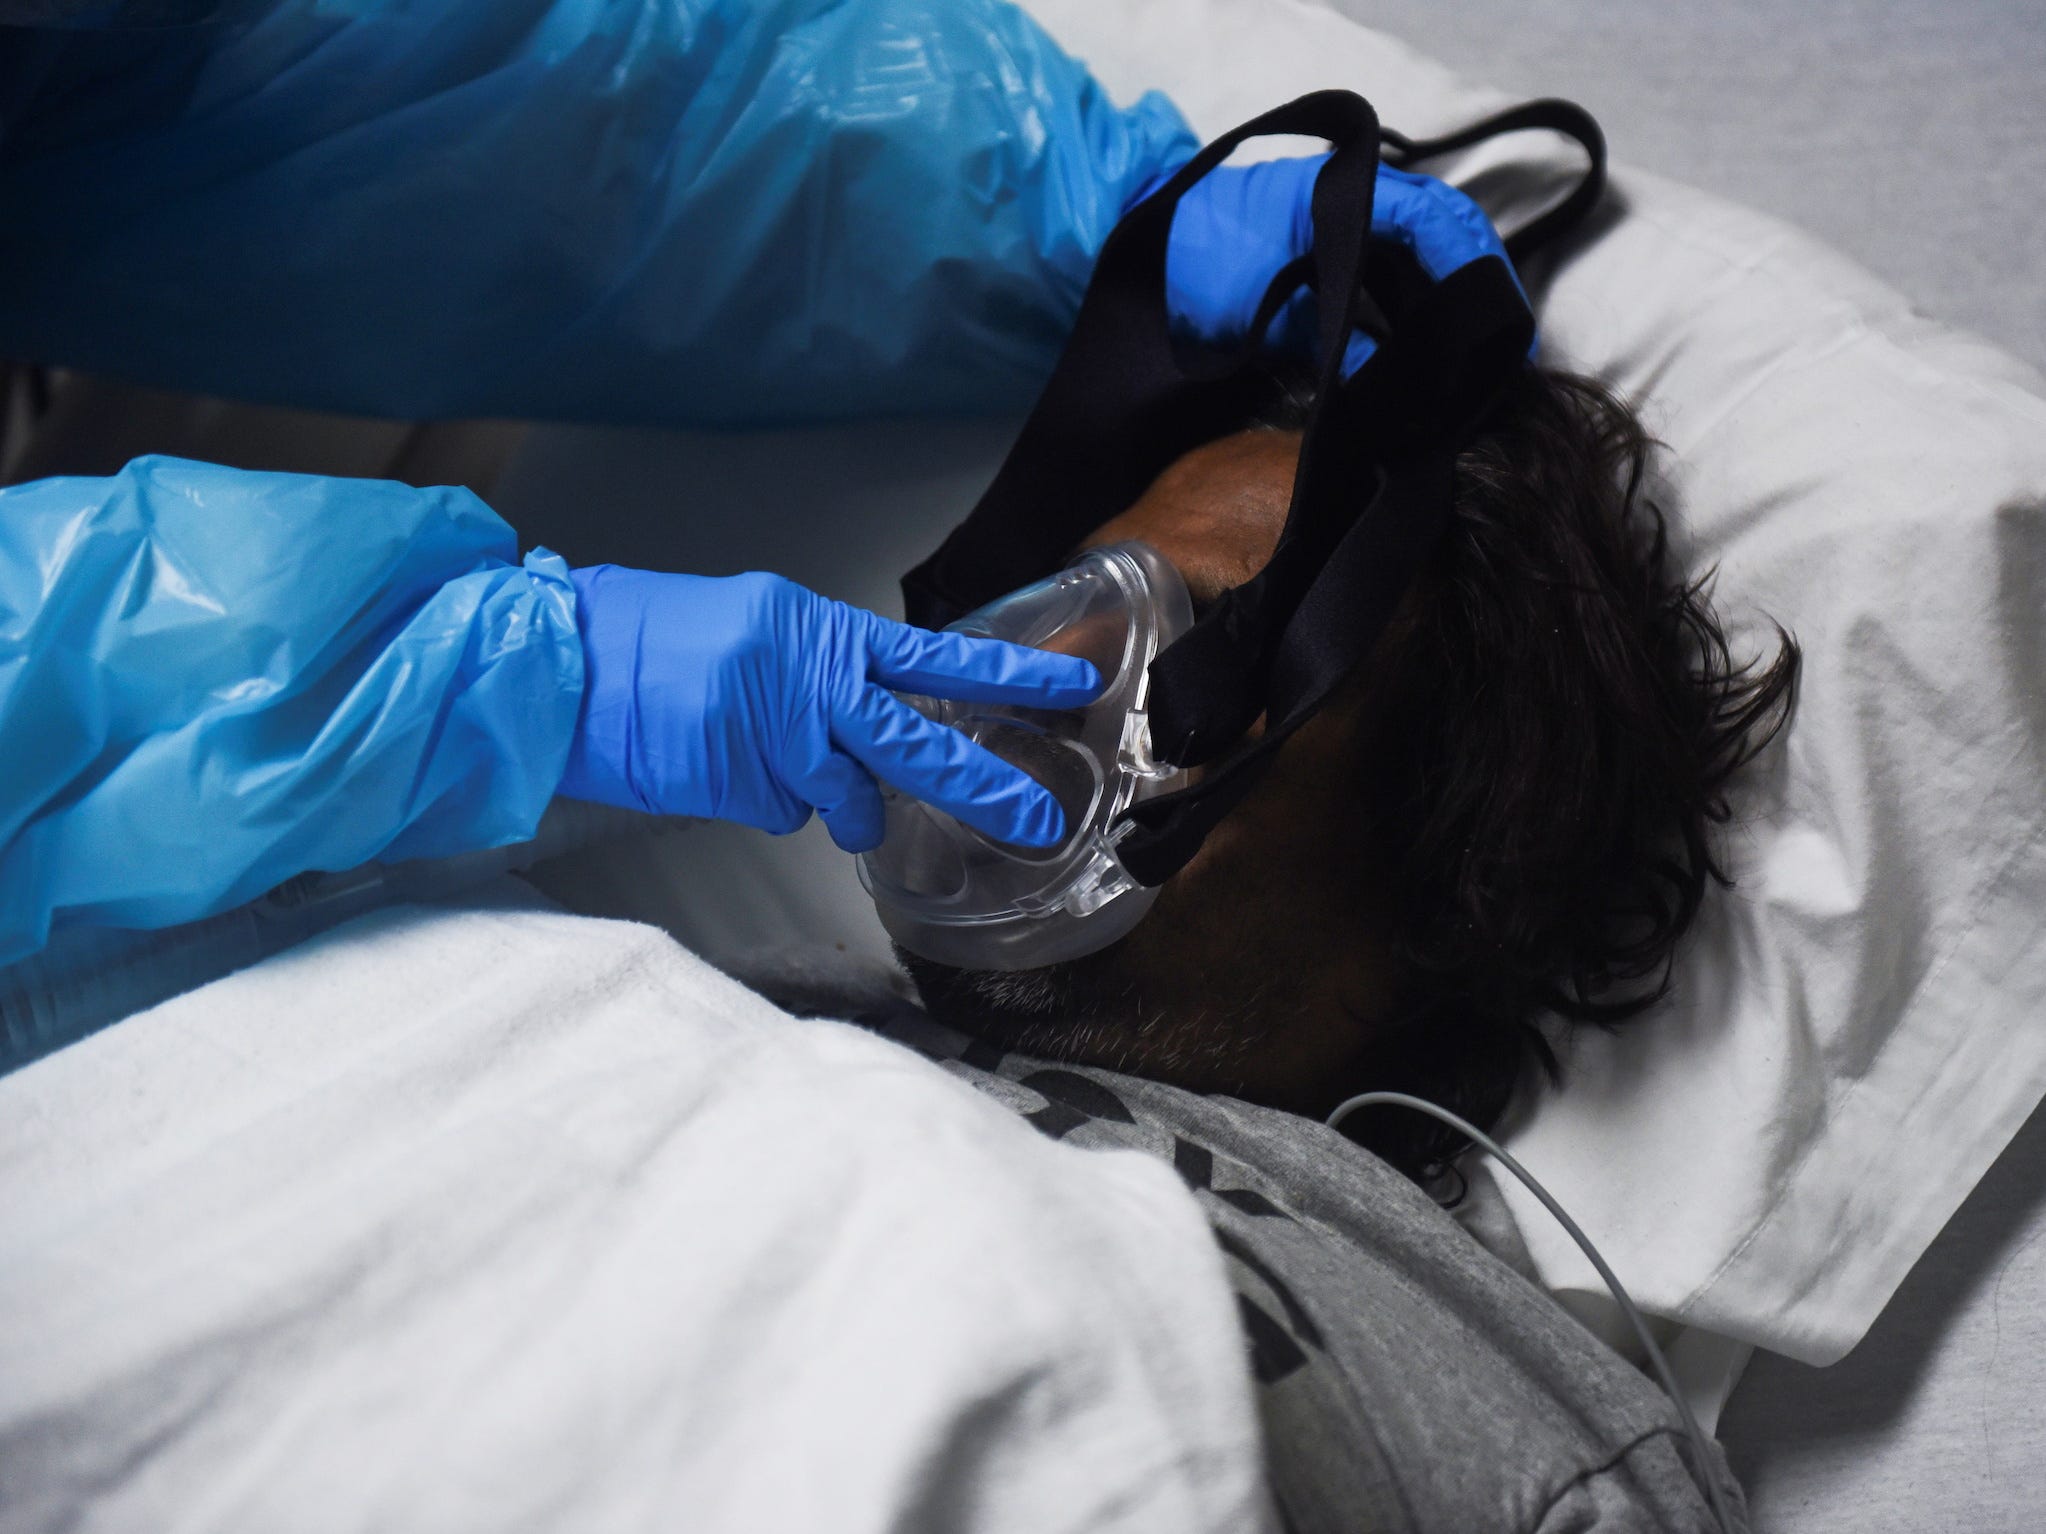 bipap machine covid patient coronavirus hospital healthcare breathing mask oxygen